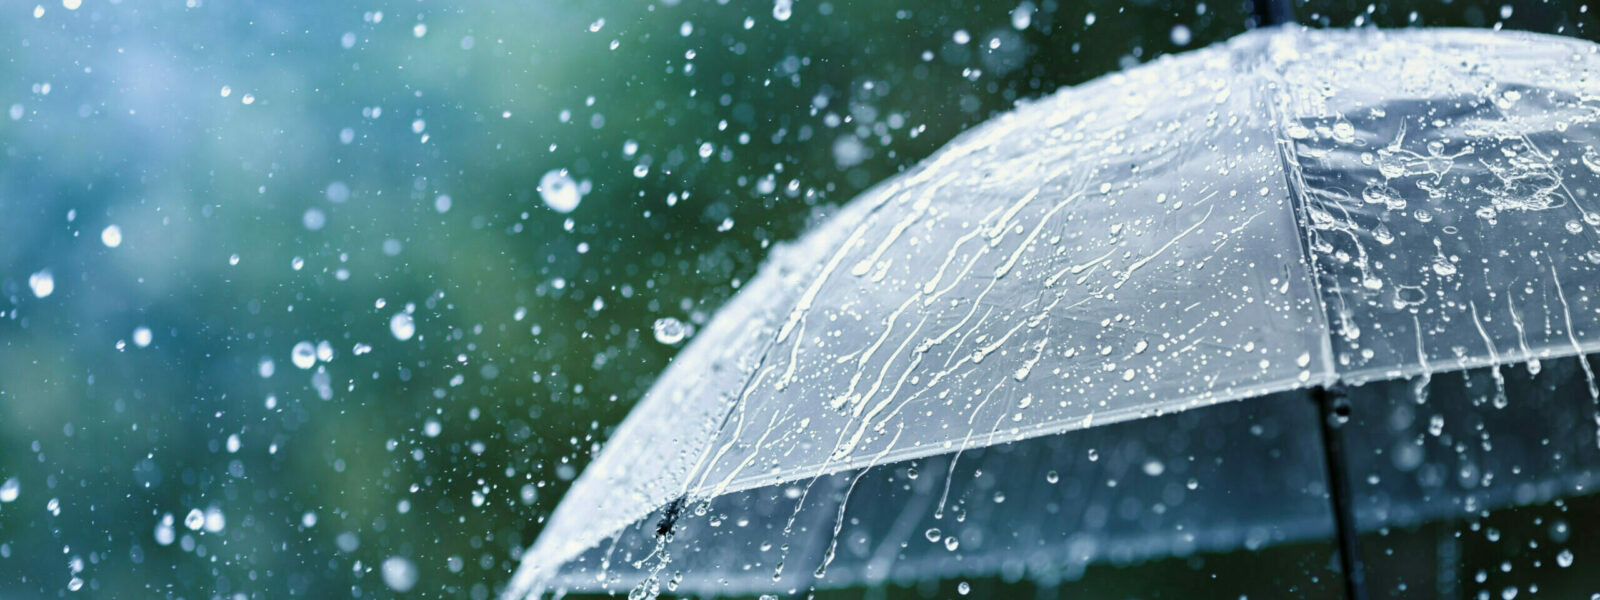 Transparent umbrella under rain against water drops splash backg